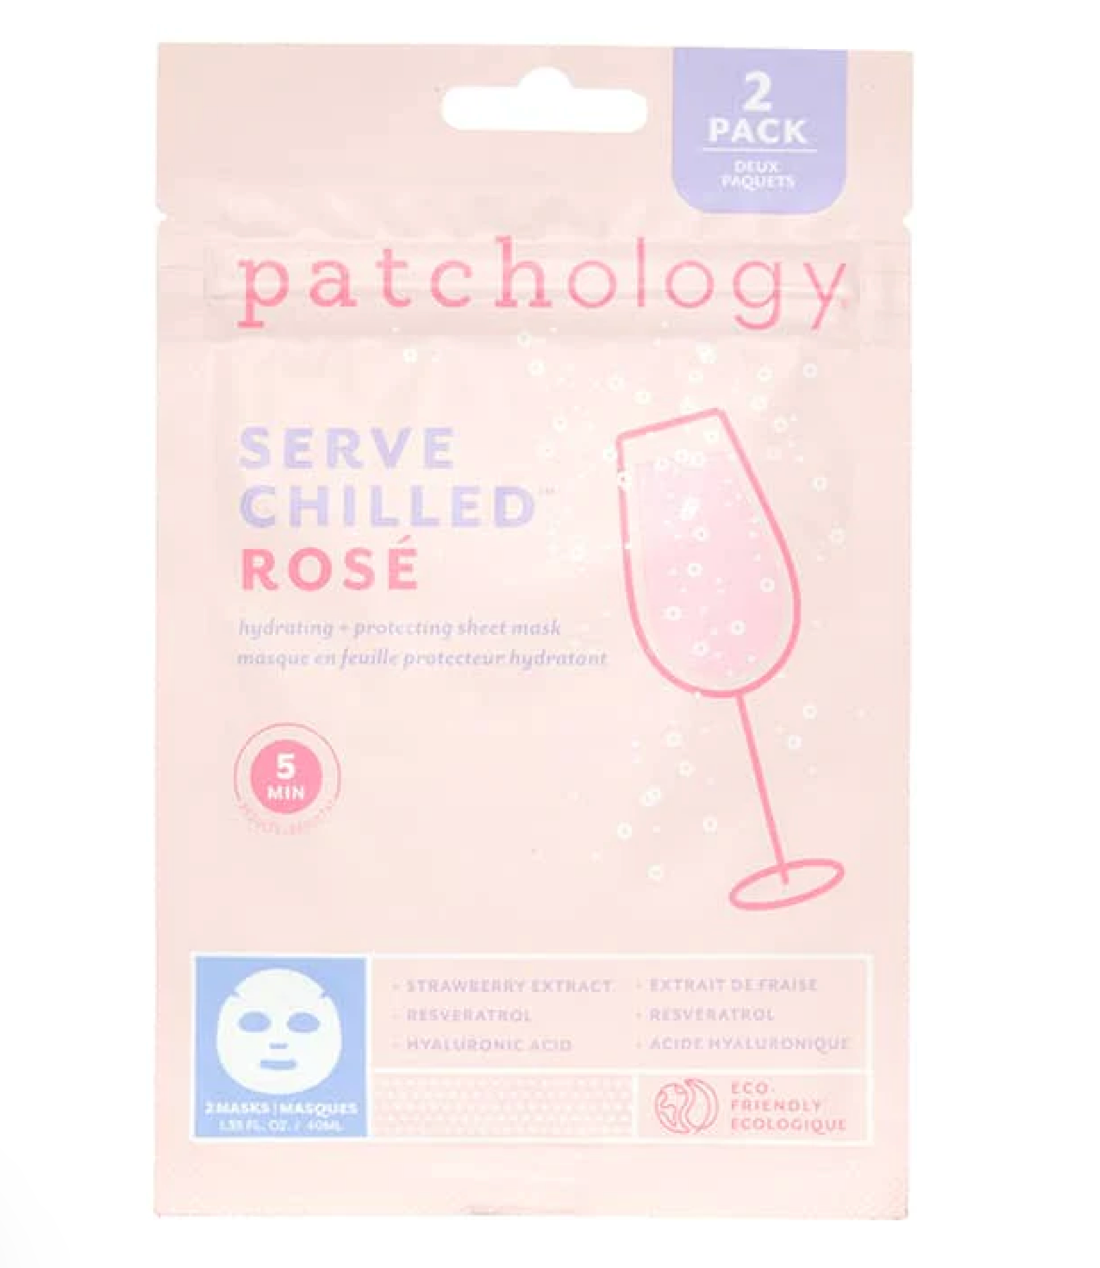 Patchology Rosè Hydrating Face Mask- 2 Pack